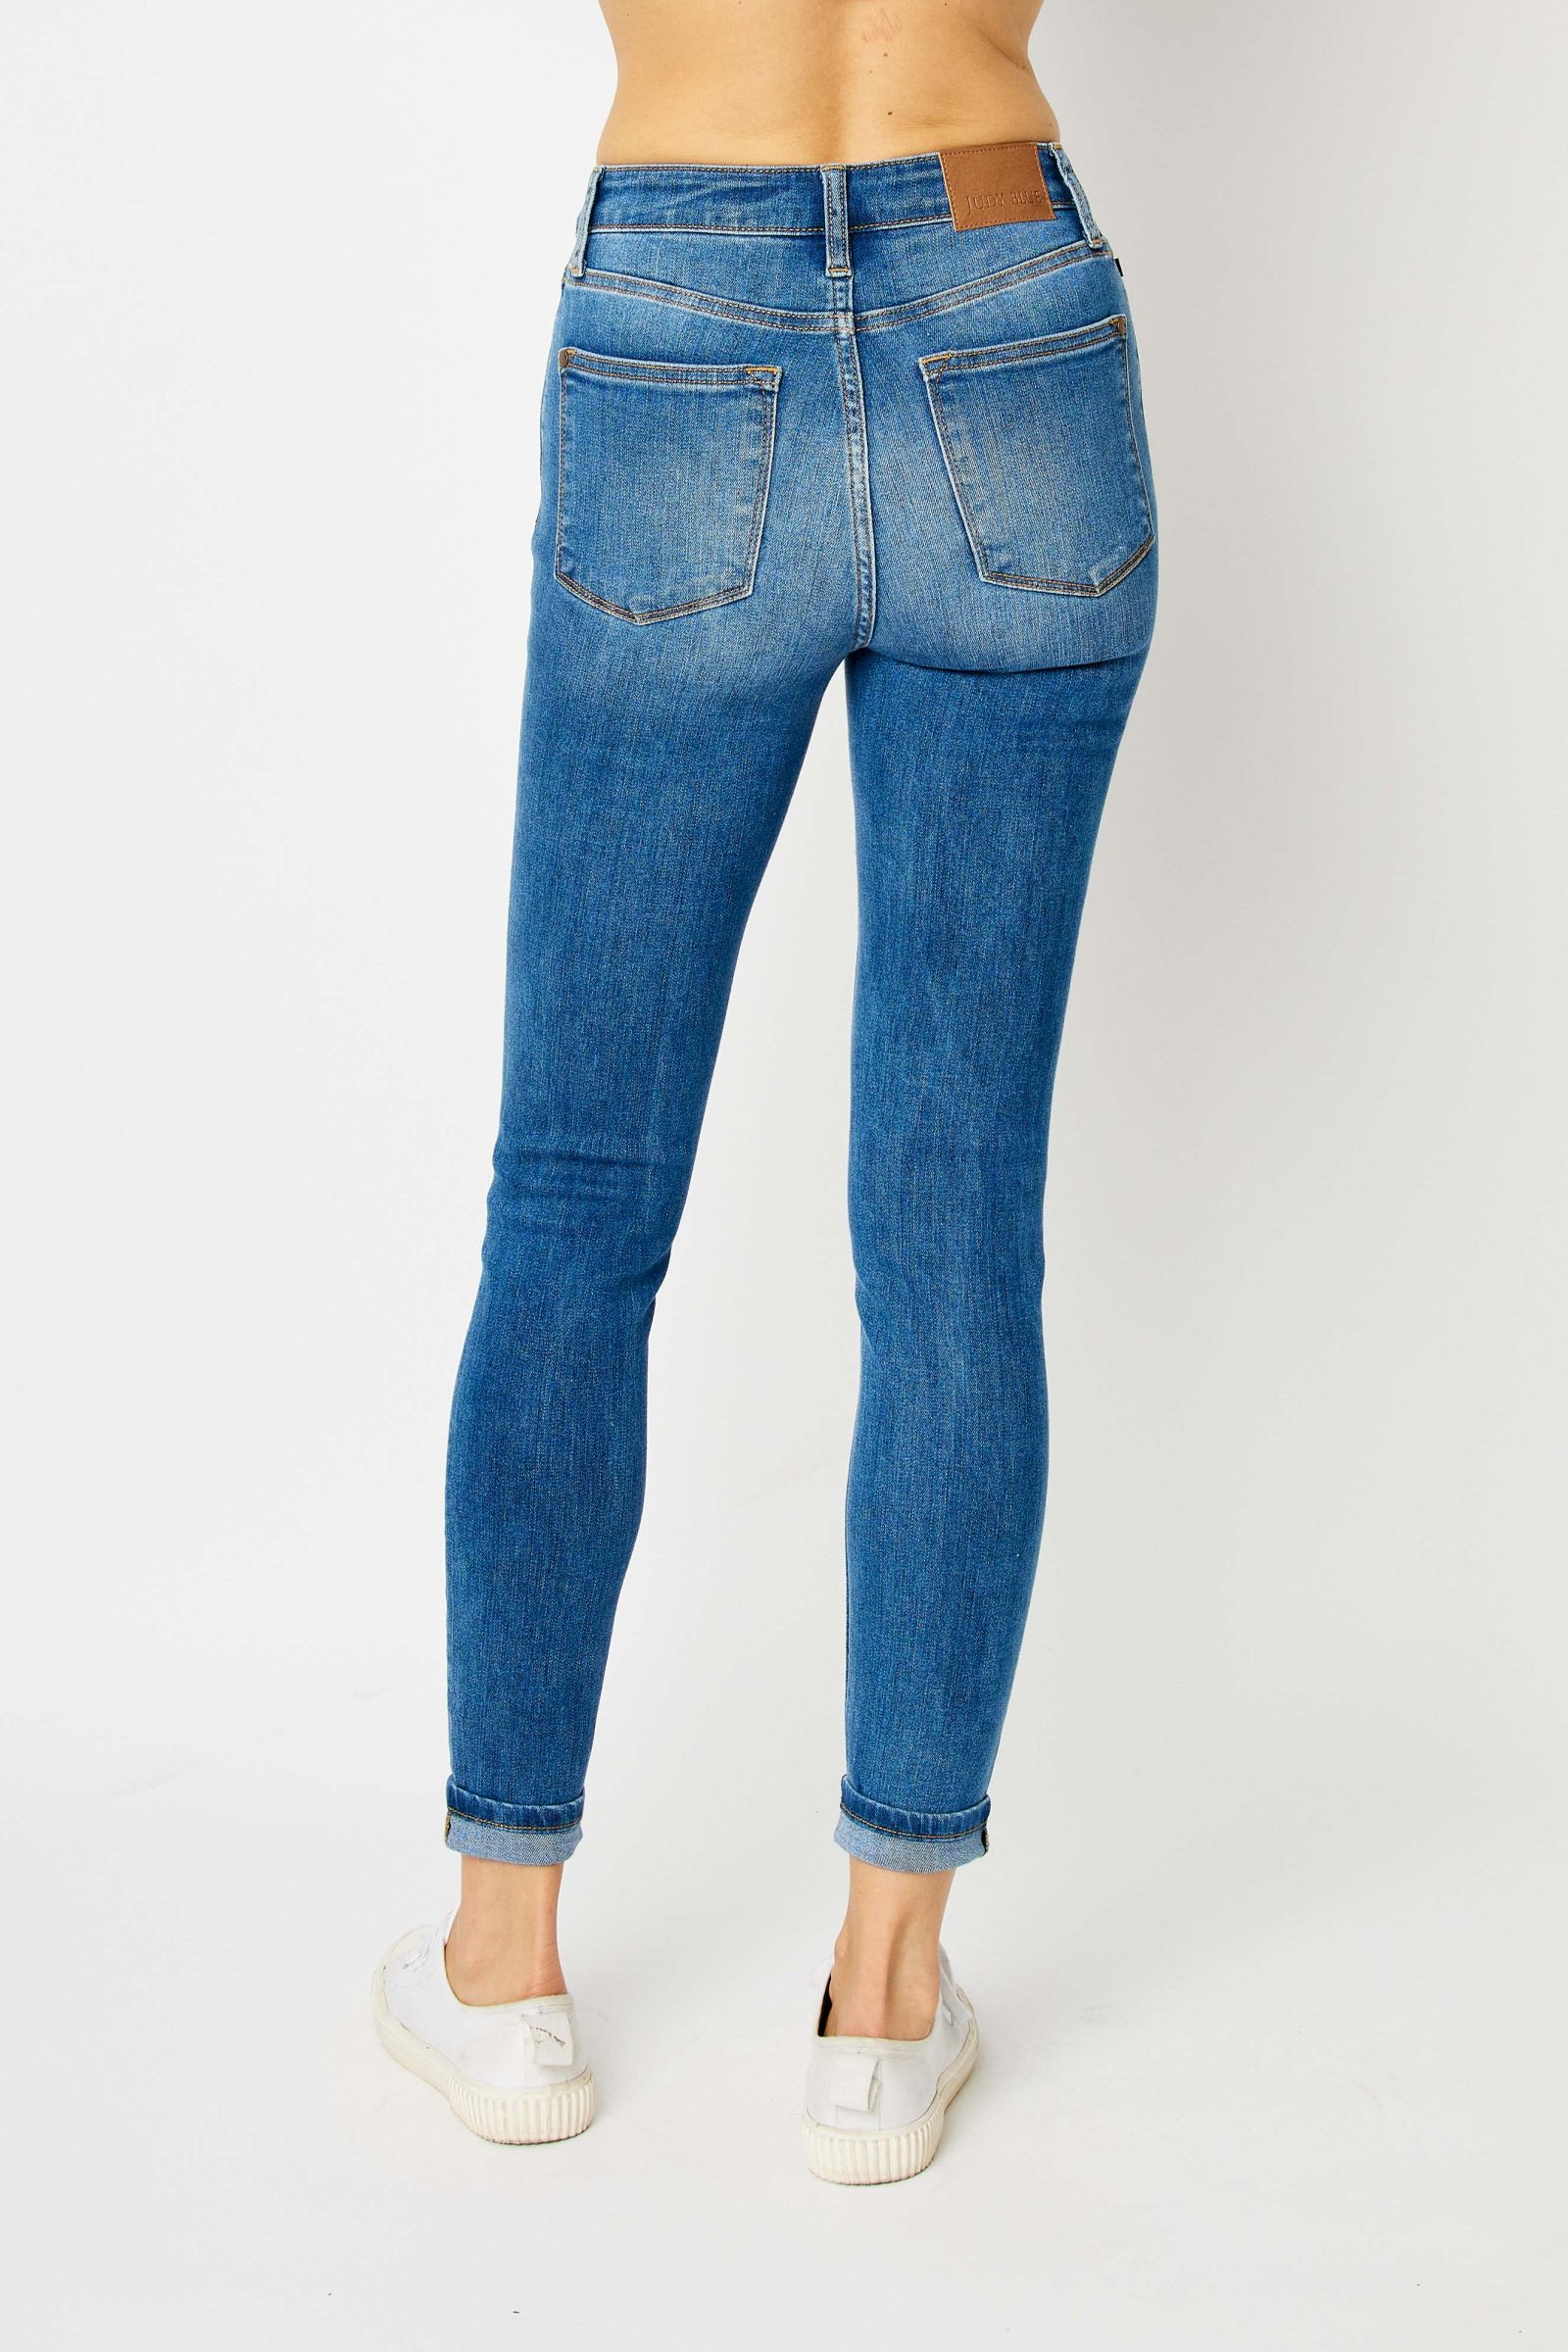 Judy Blue Jeans 82449